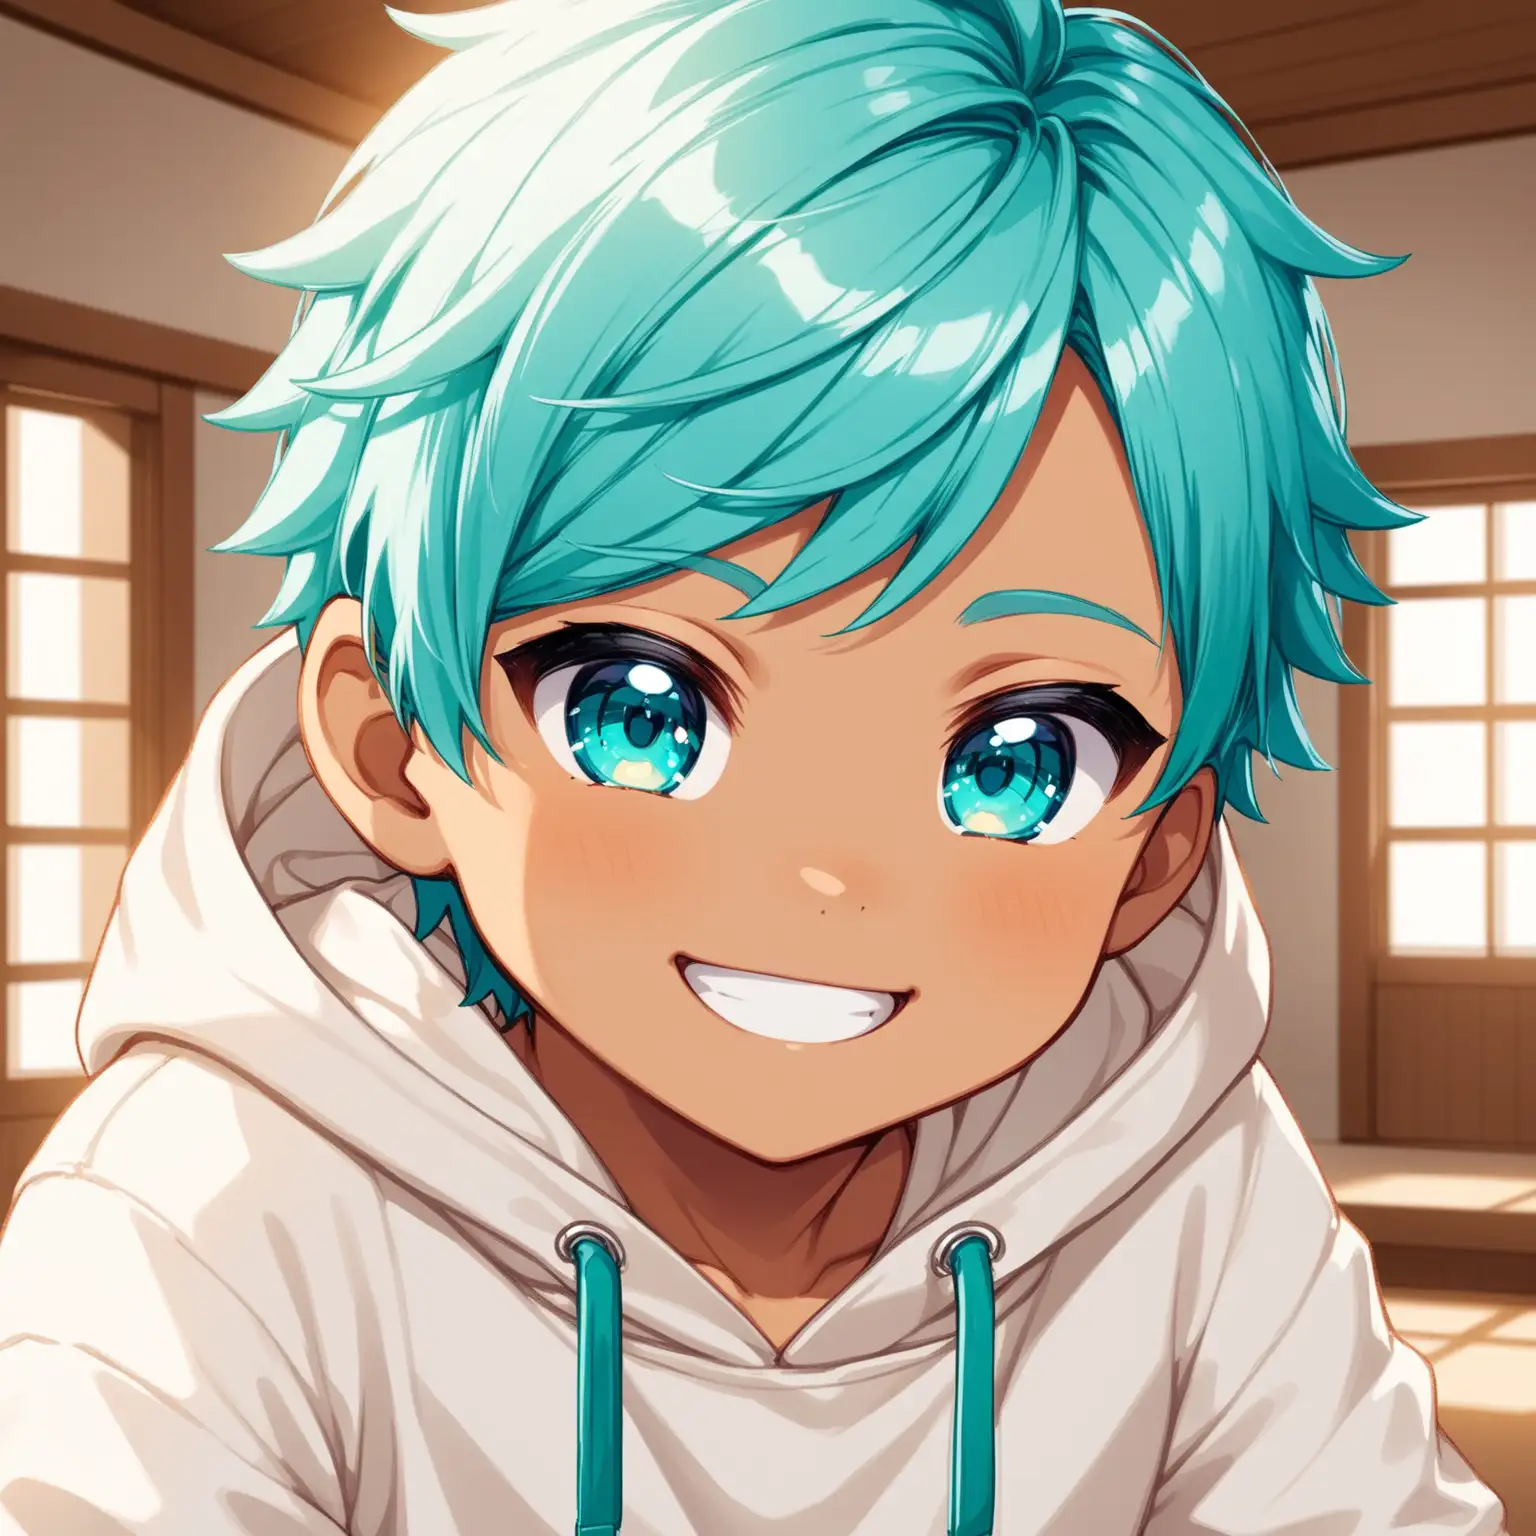 Draw a chibi anime man, aquamarine hair, teal eyes, light tan skin, close up shot, indoors, natural lighting, high quality, detailed, accurate, wearing a white hoodie, smiling